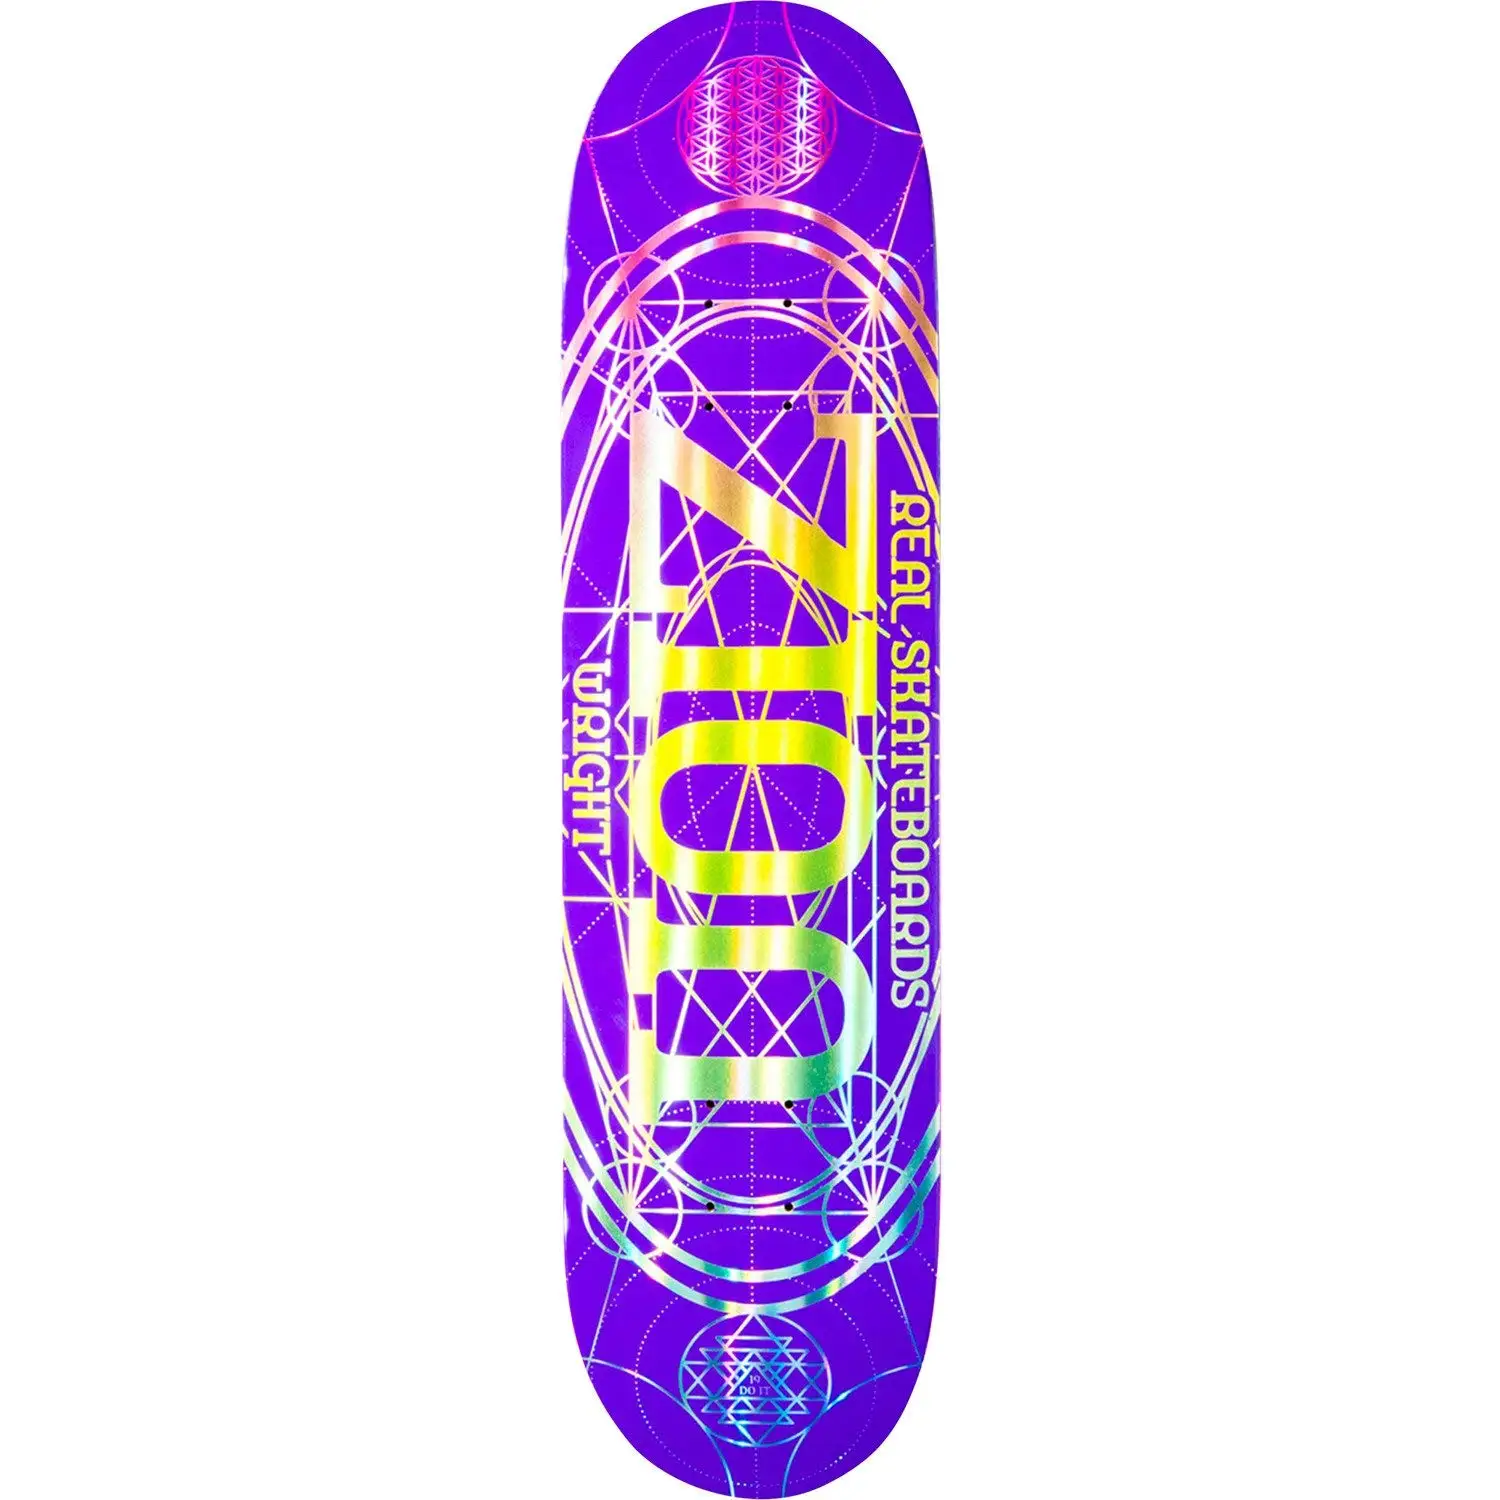 Buy Real Skateboards - Kil em All Skateboard Sticker - 13cm high approx shark in Cheap Price on ...